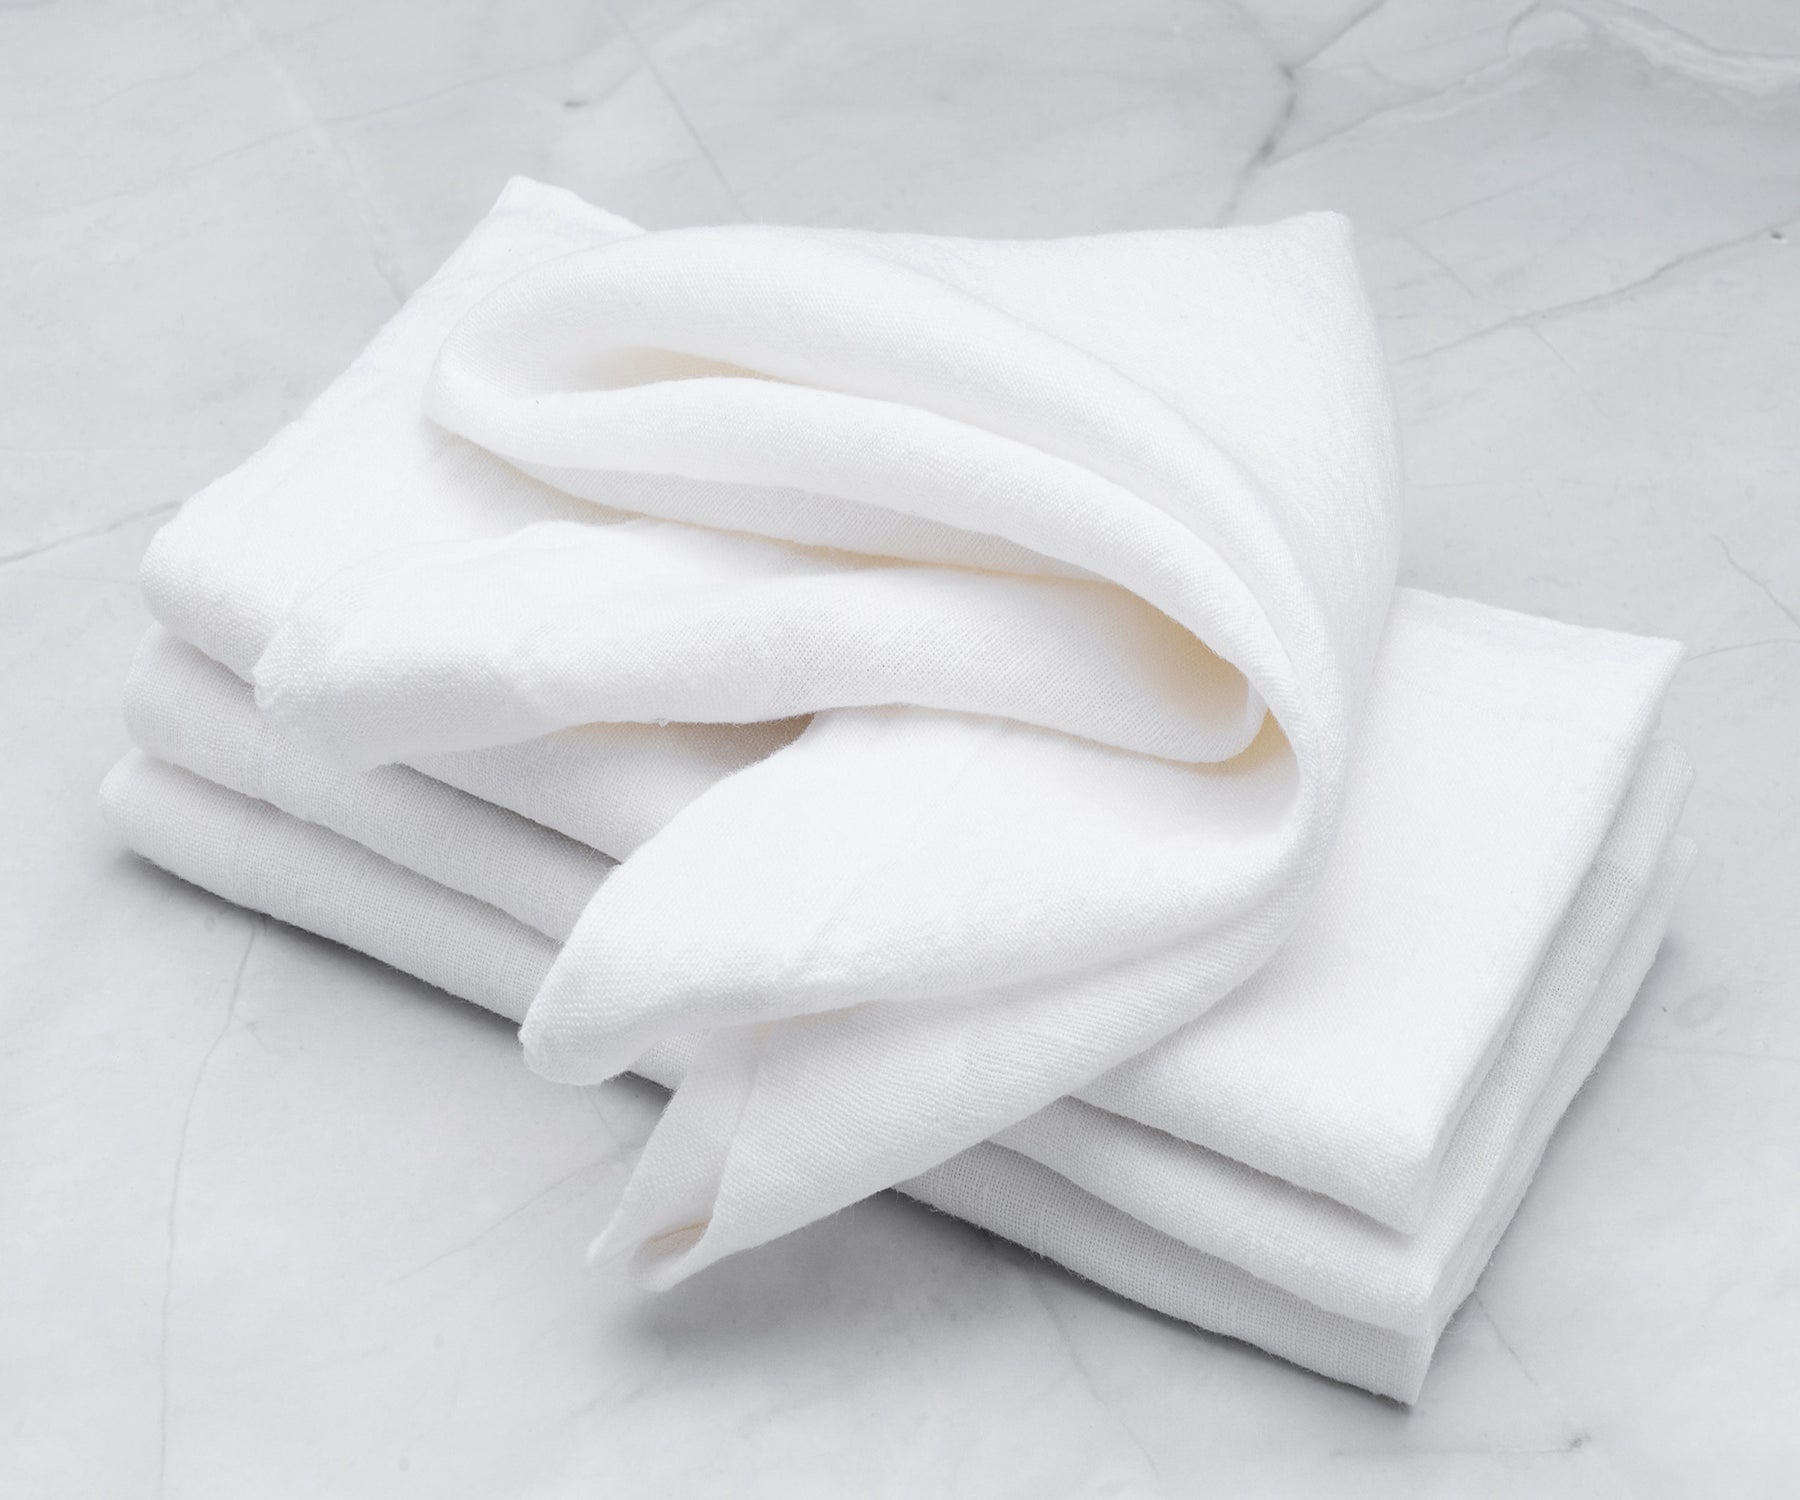 All cotton and linen - White linen napkins 